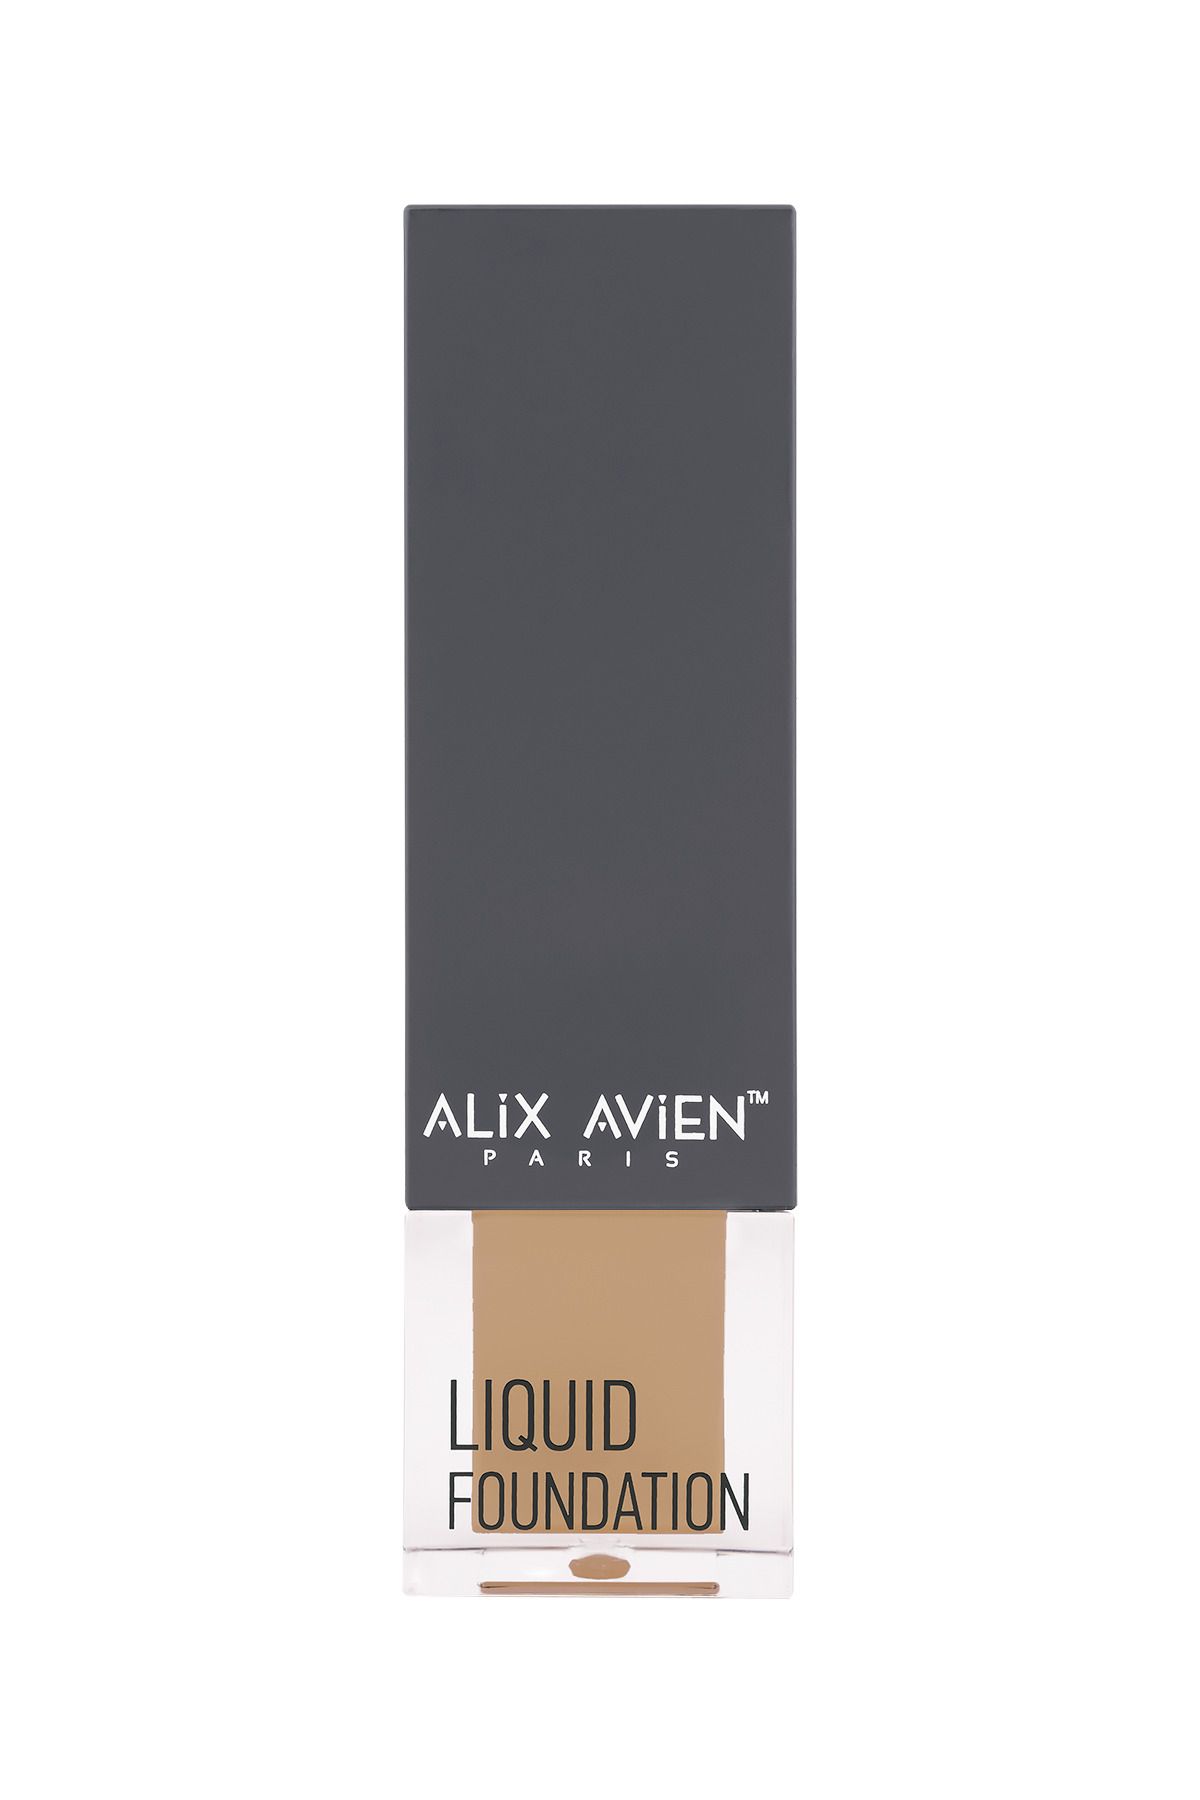 Alix Avien Liquid Foundation 307 True Sand-likit Fondöten Ten Makyajı-doğal Parlak Etki Kremsi Yapı-spf 35